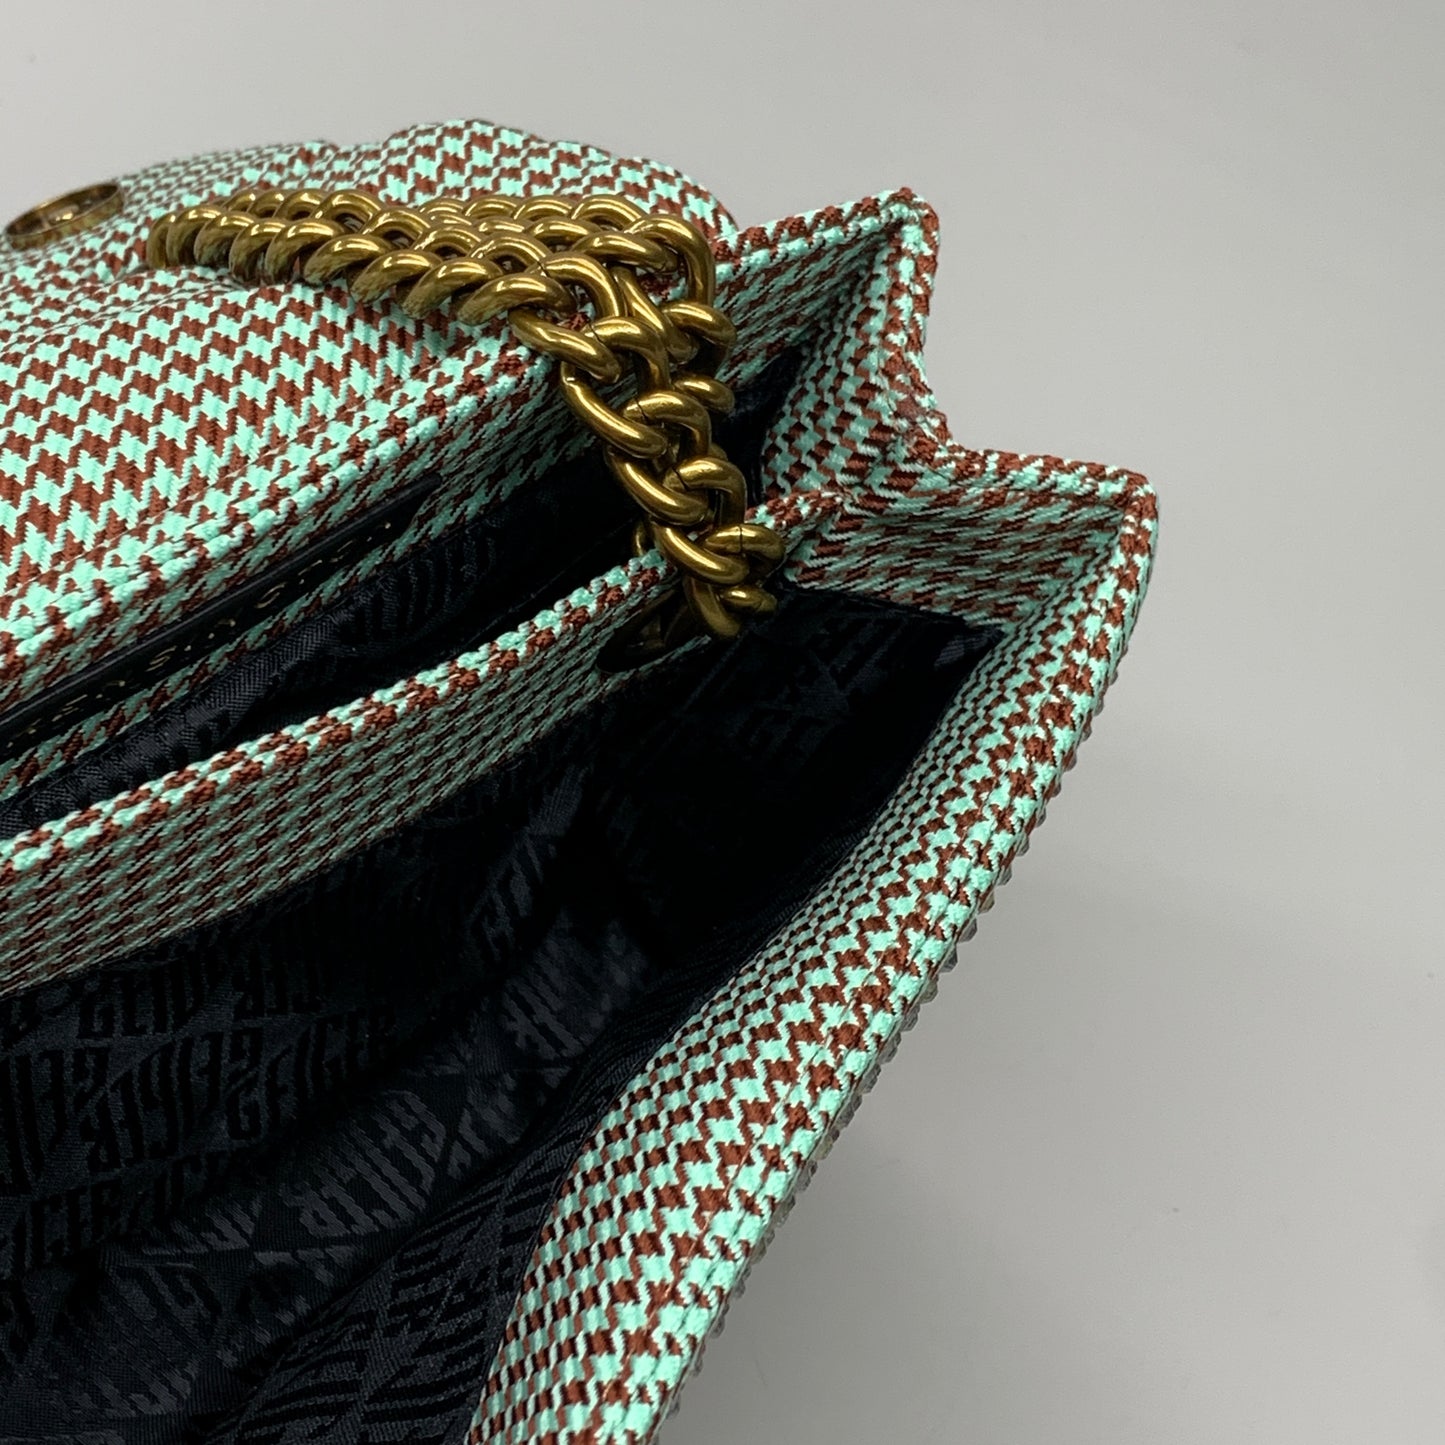 KURT GEIGER Kensington Tan Comb Fabric Day Bag 11" x 8.5" Multi-Color 2690536609 New